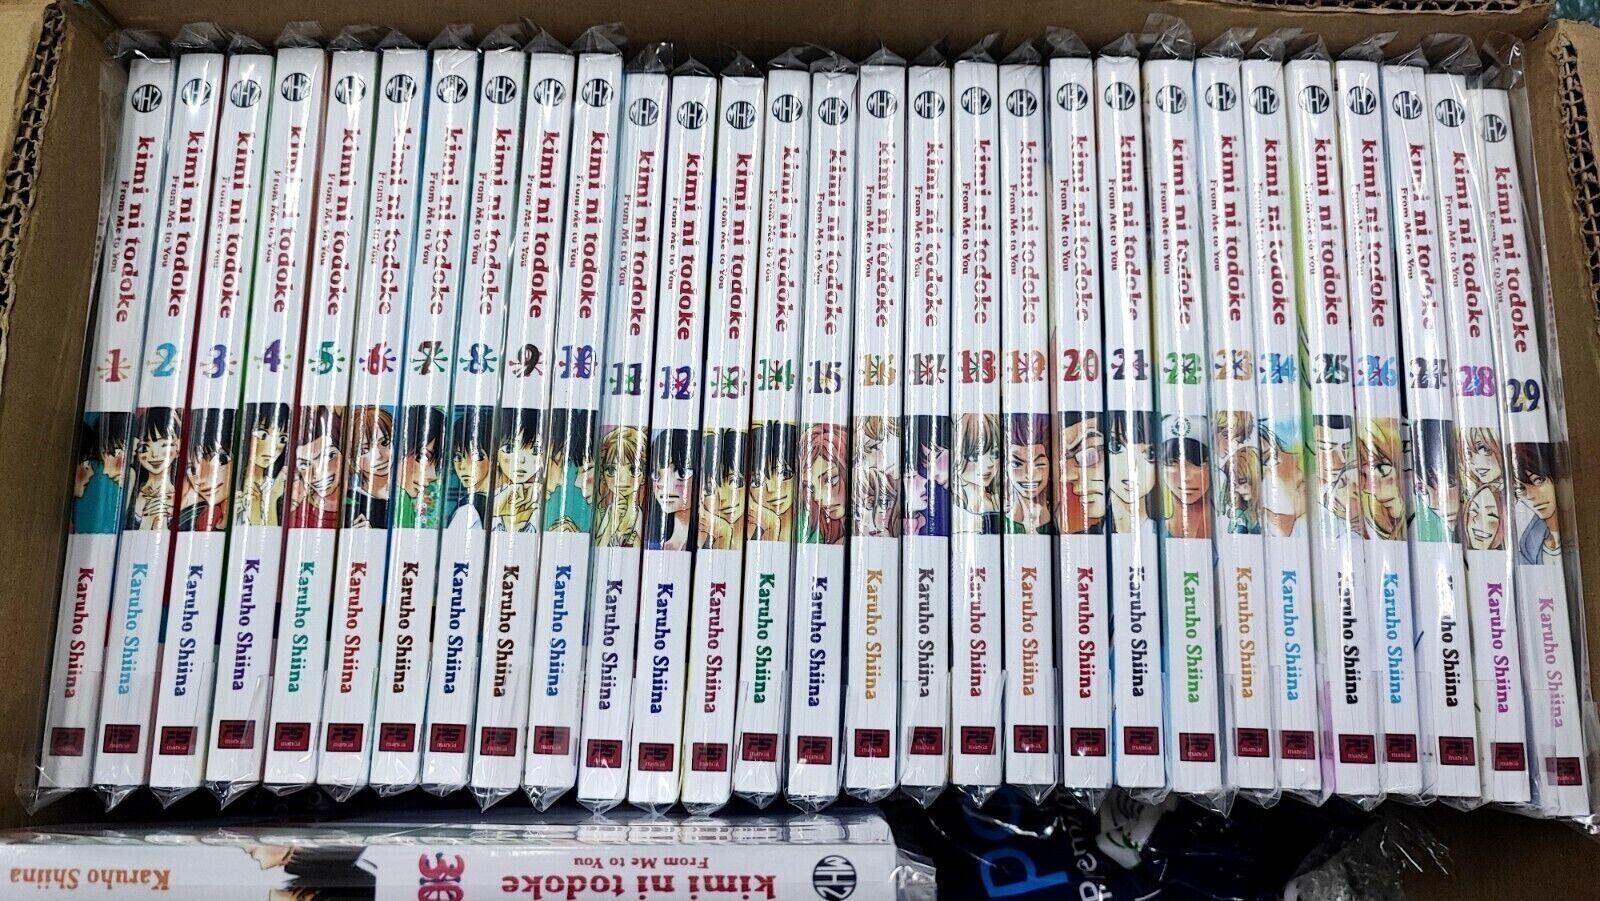 Kimi Ni Todoke By Karuho Shiina English Version Volumes 1-30 Complete Set